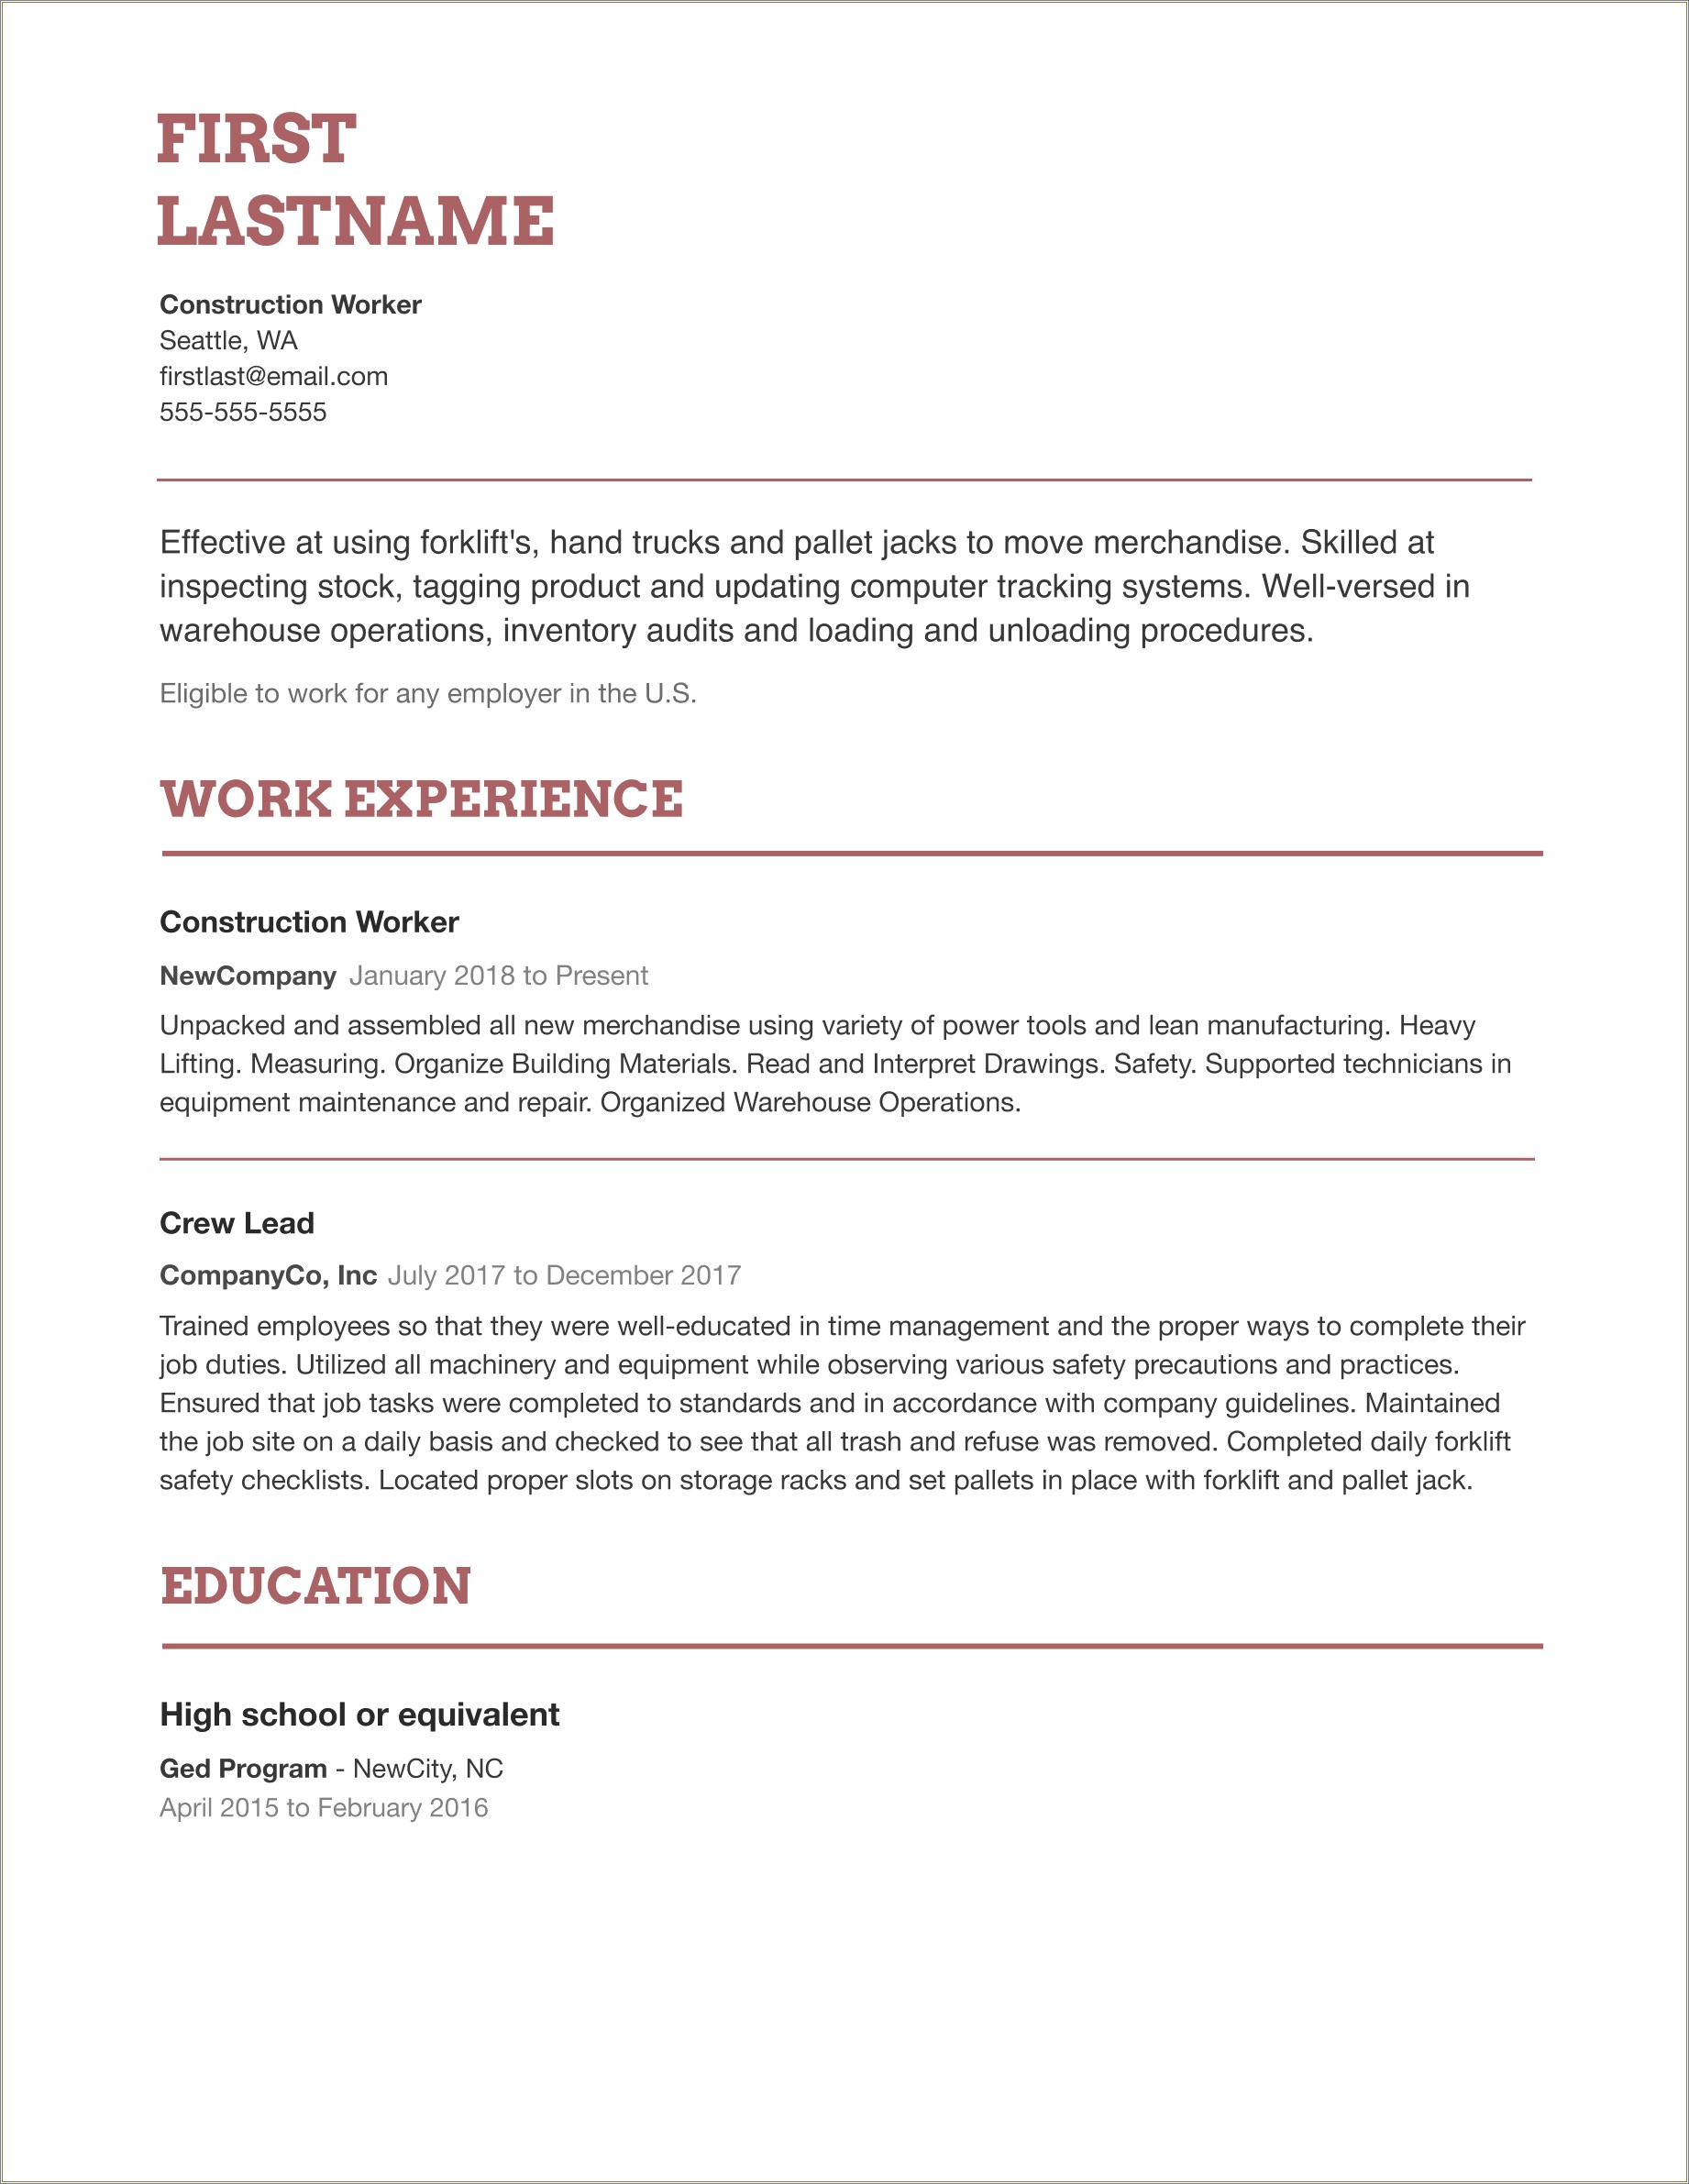 who can help me create a resume